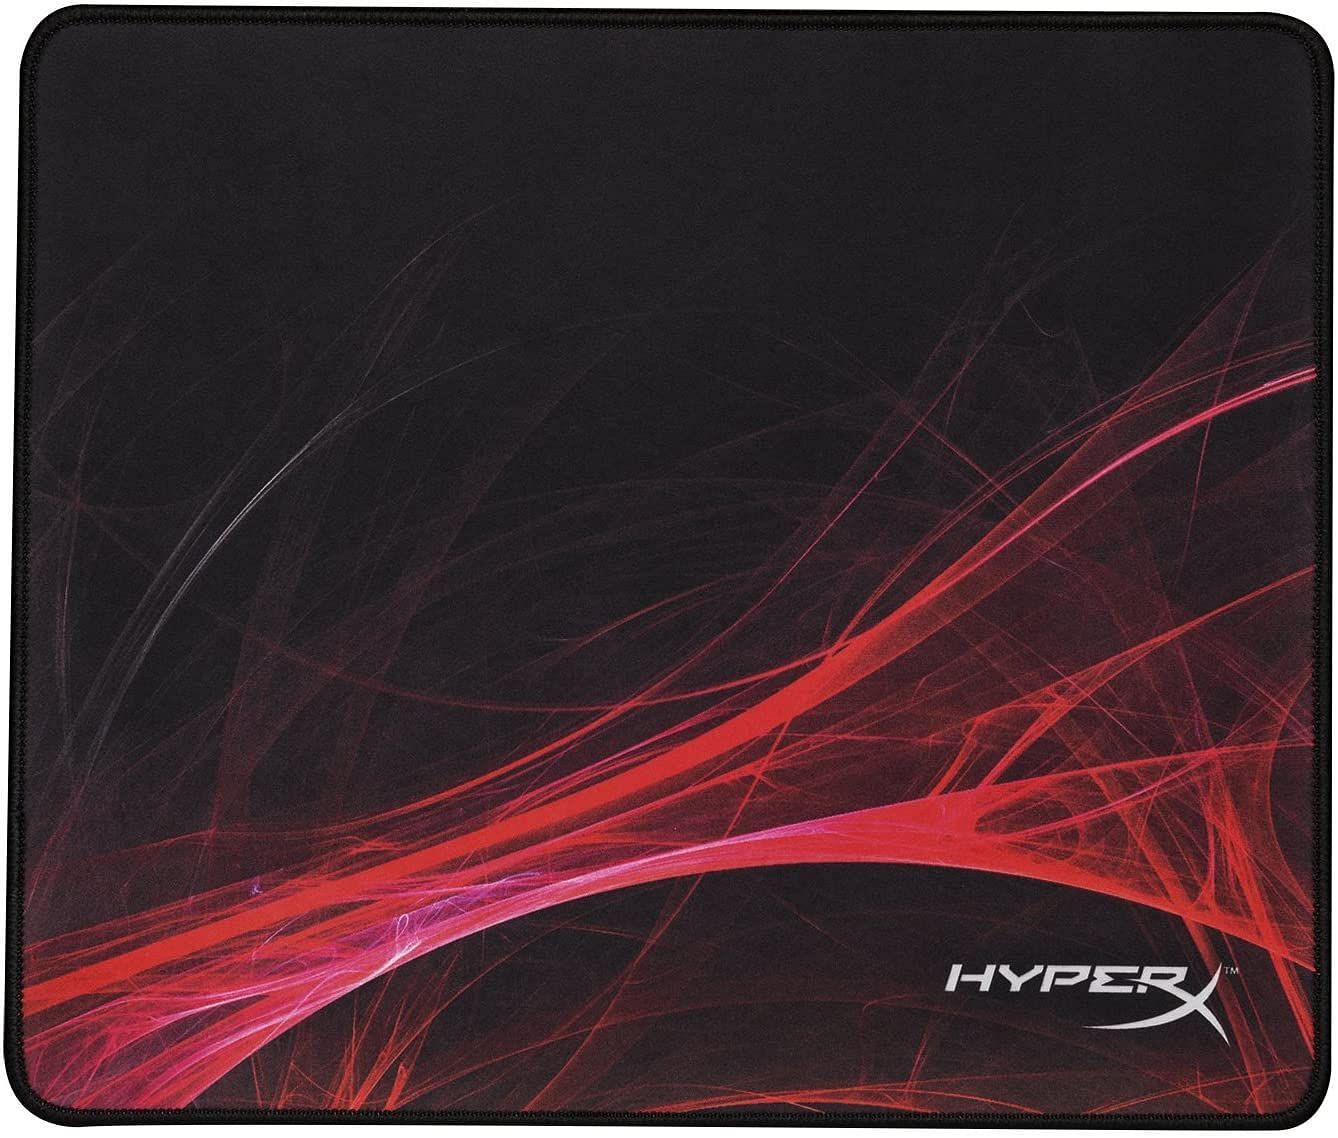 The HyperX Fury S gaming mouse pad (Image via Amazon)